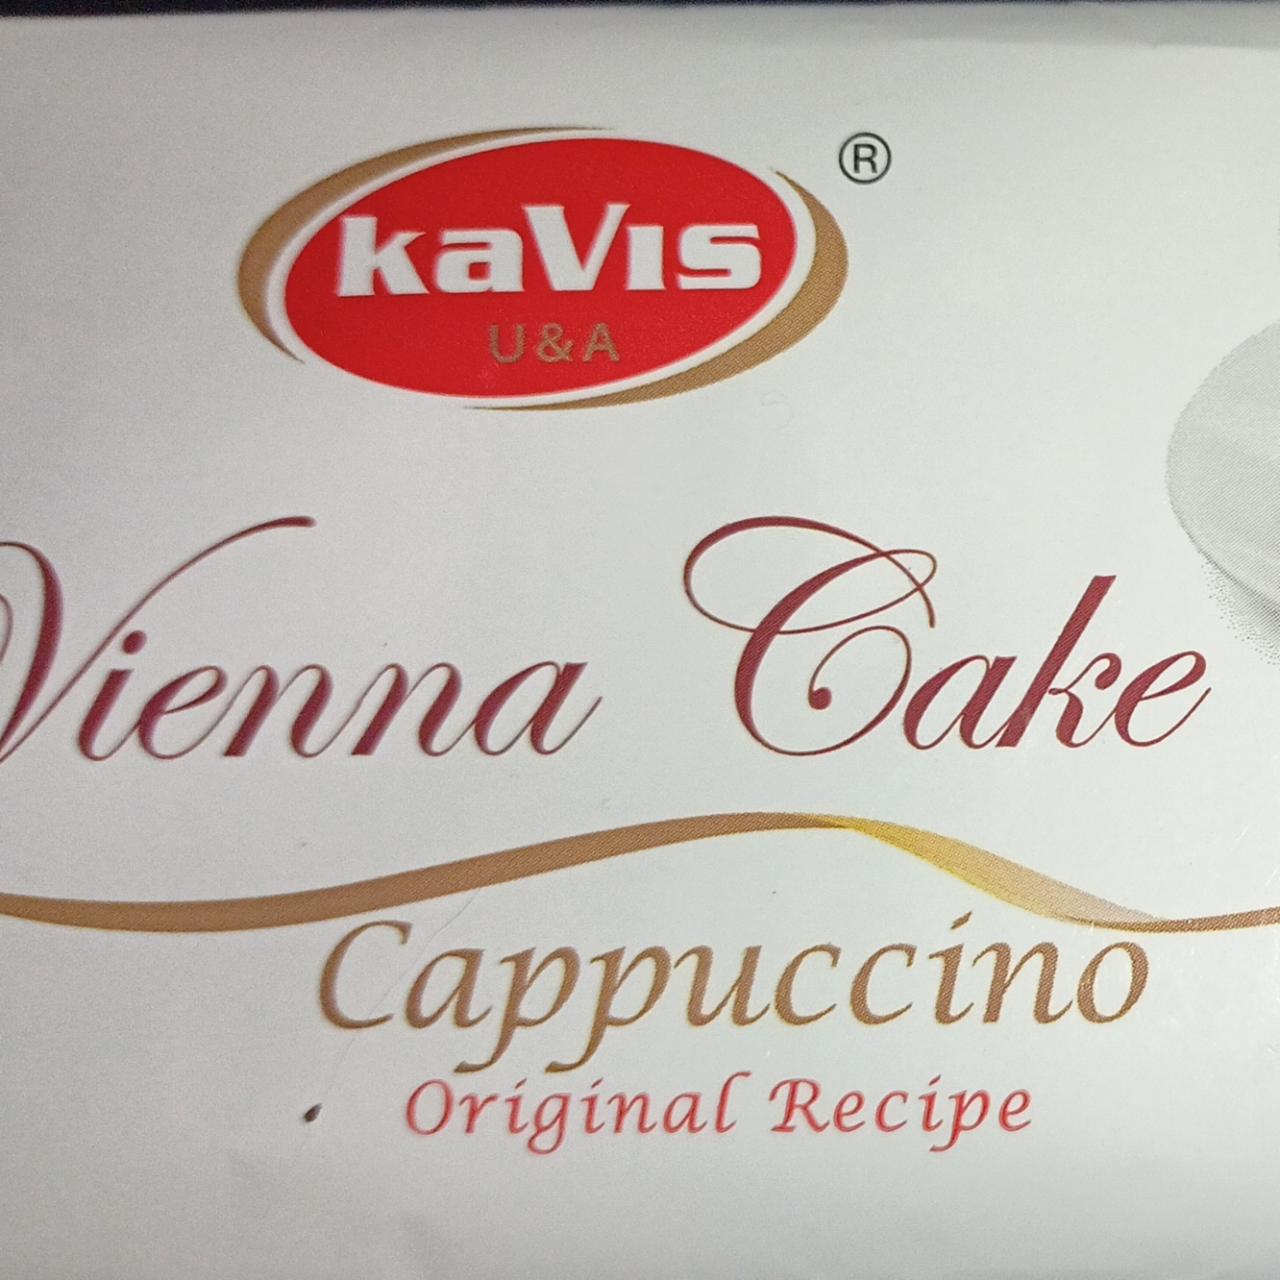 Zdjęcia - Vienna Cake Cappuccino kaVis